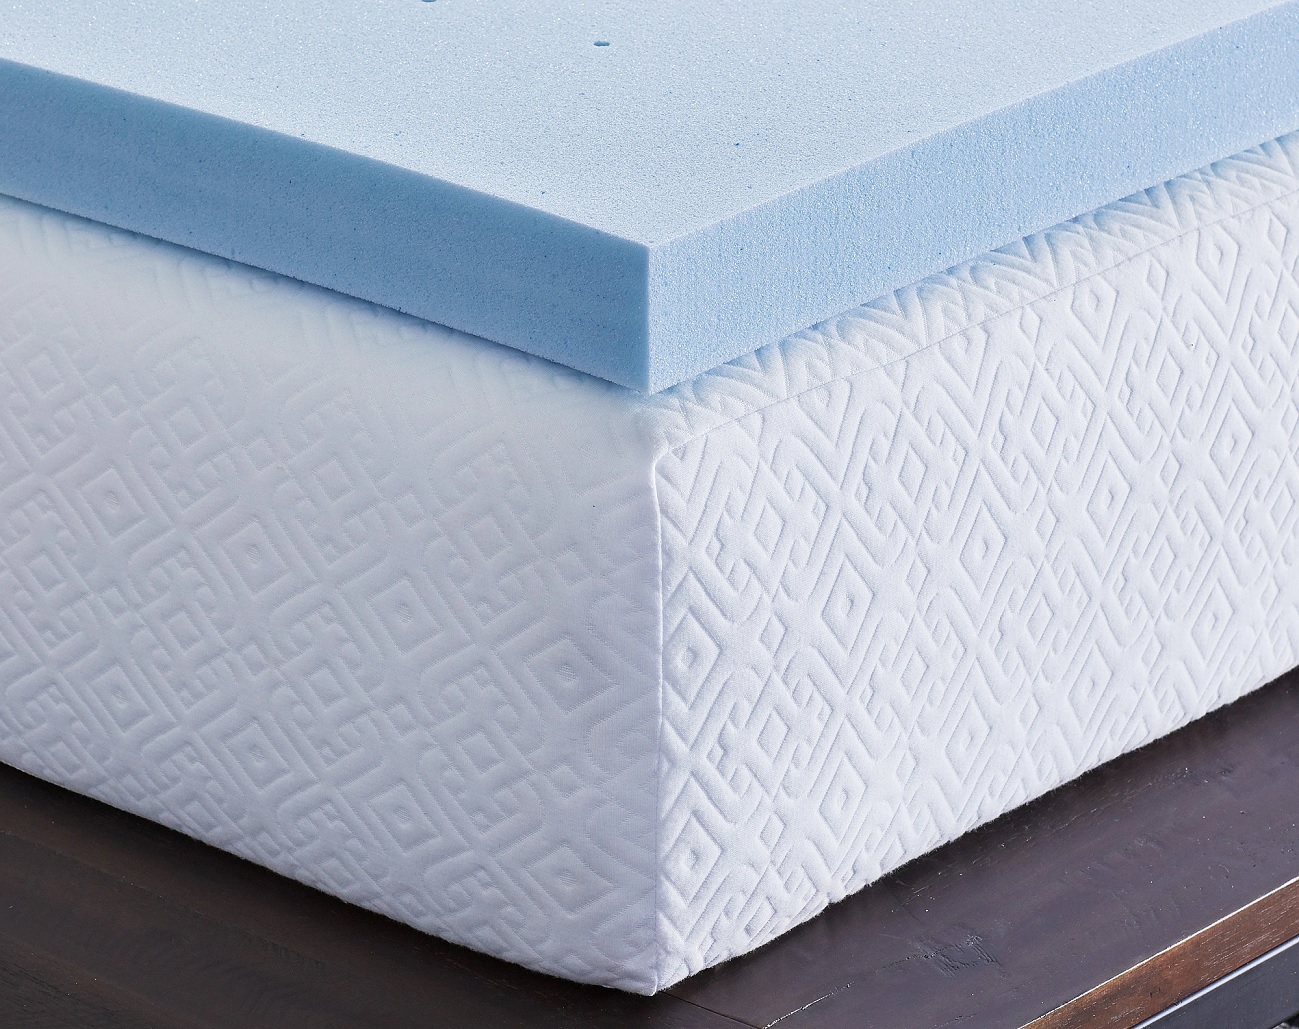 a gel memory foam topper on a mattress